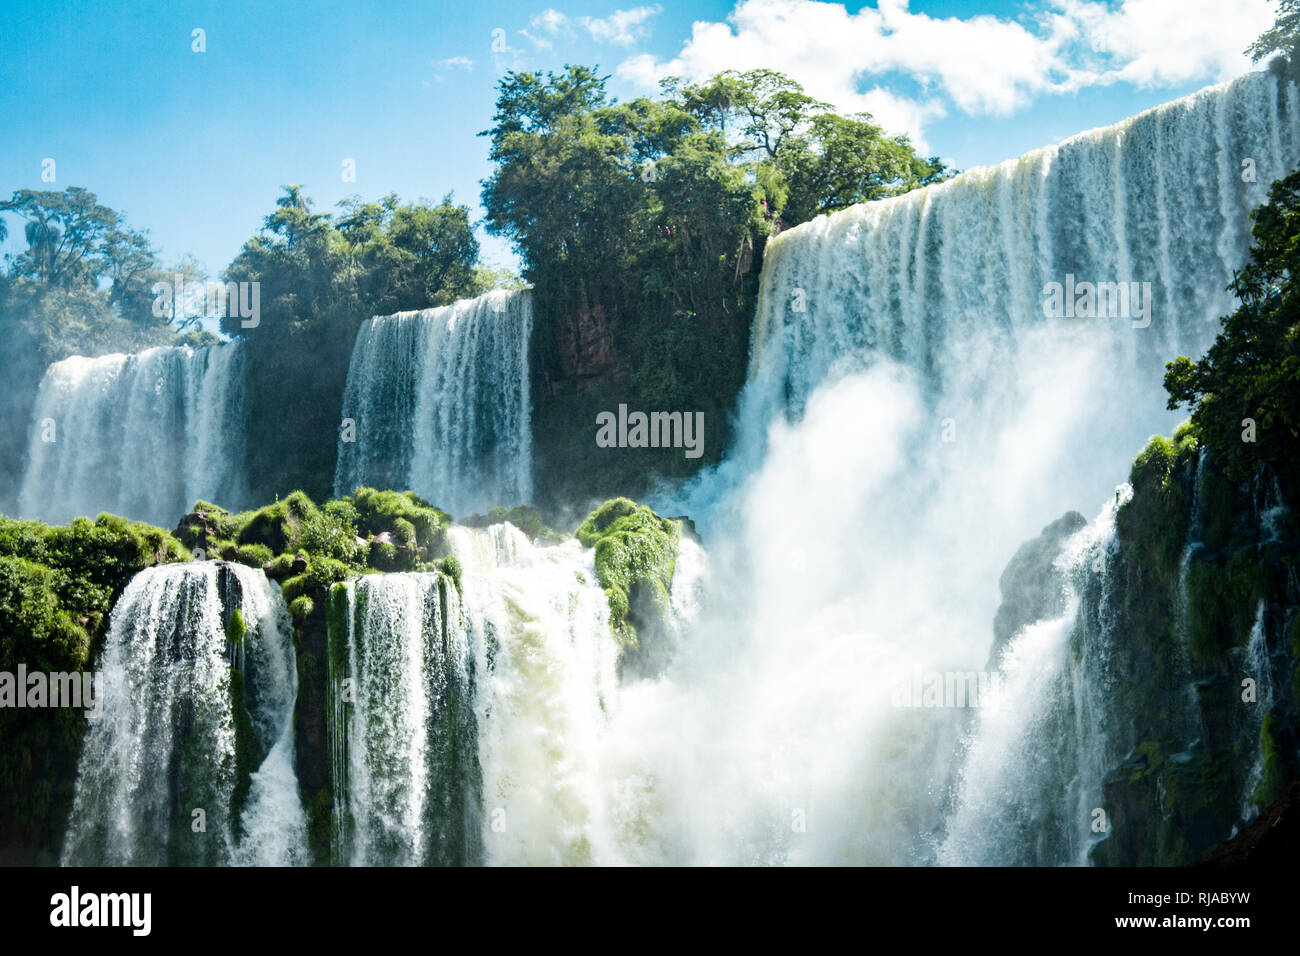 The Amazing waterfalls of Iguazu in Brazil Stock Photo